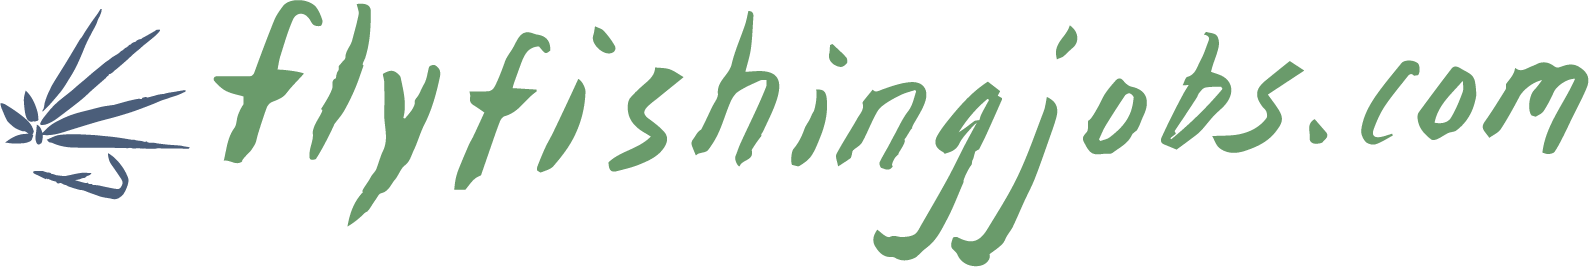 Fly fishing jobs com logo.